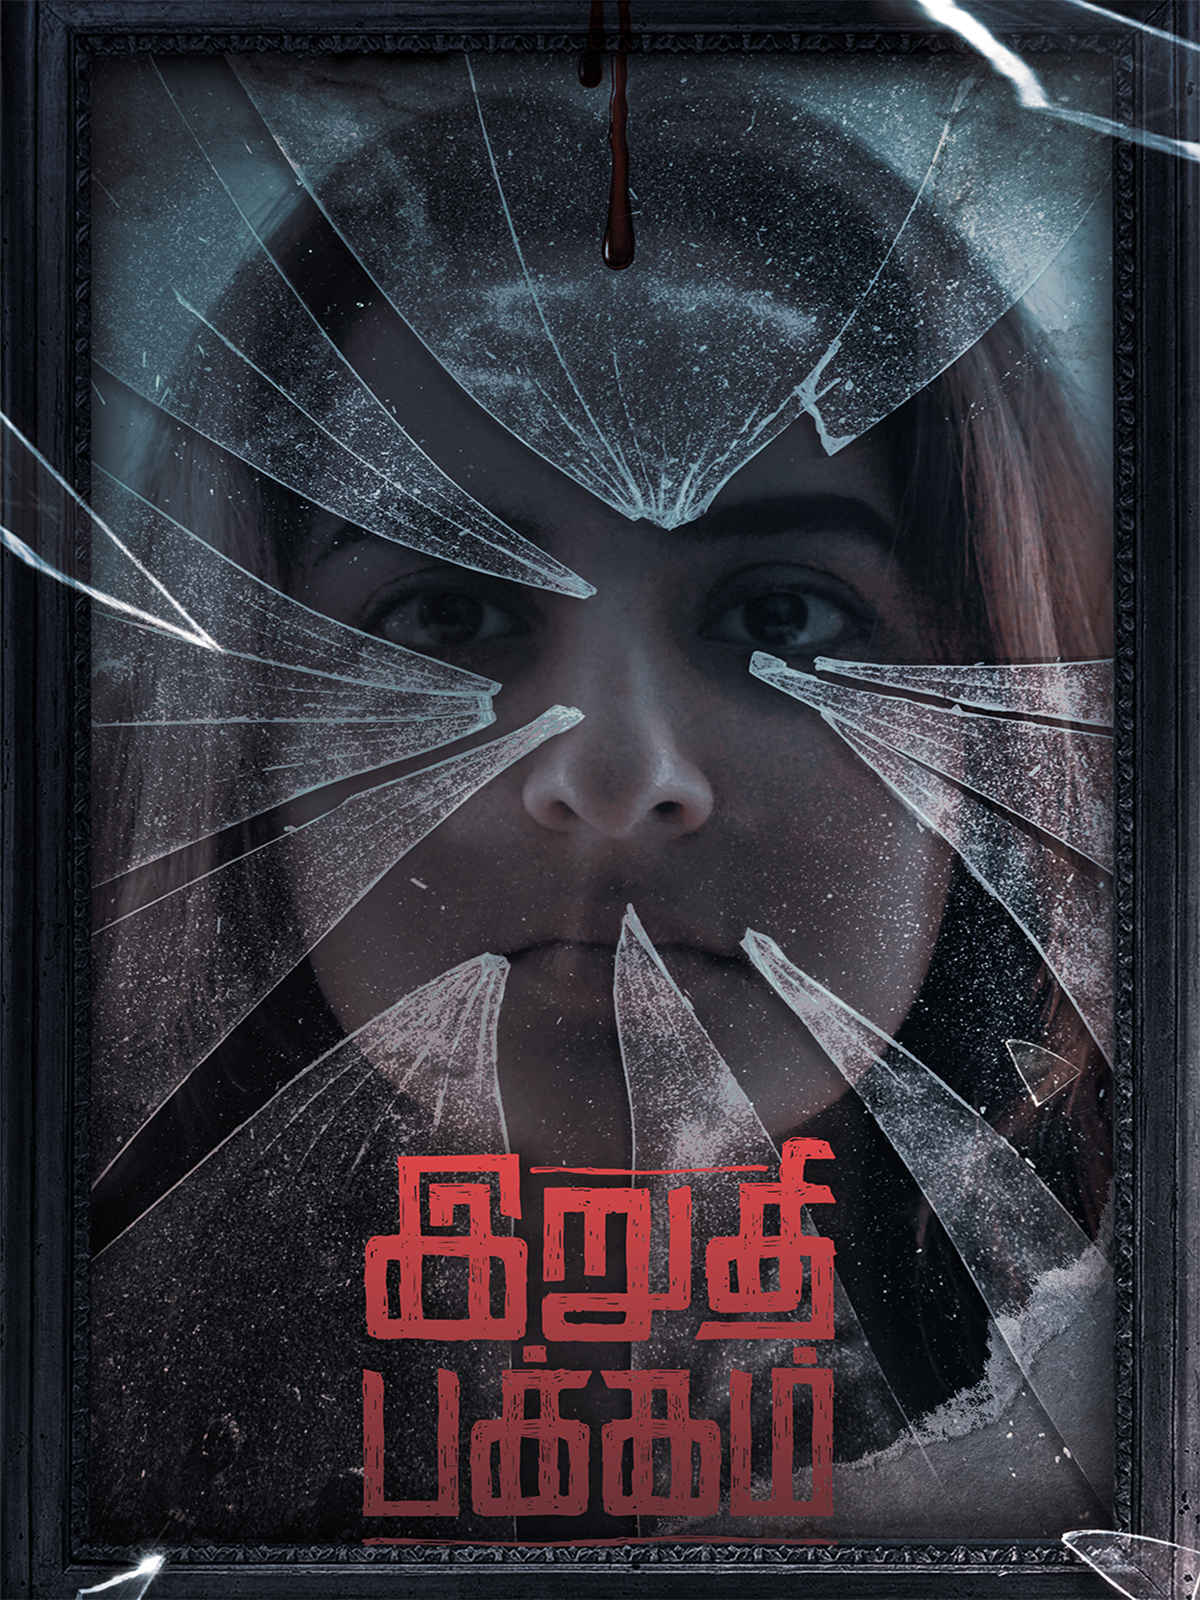 Tamil thriller movies